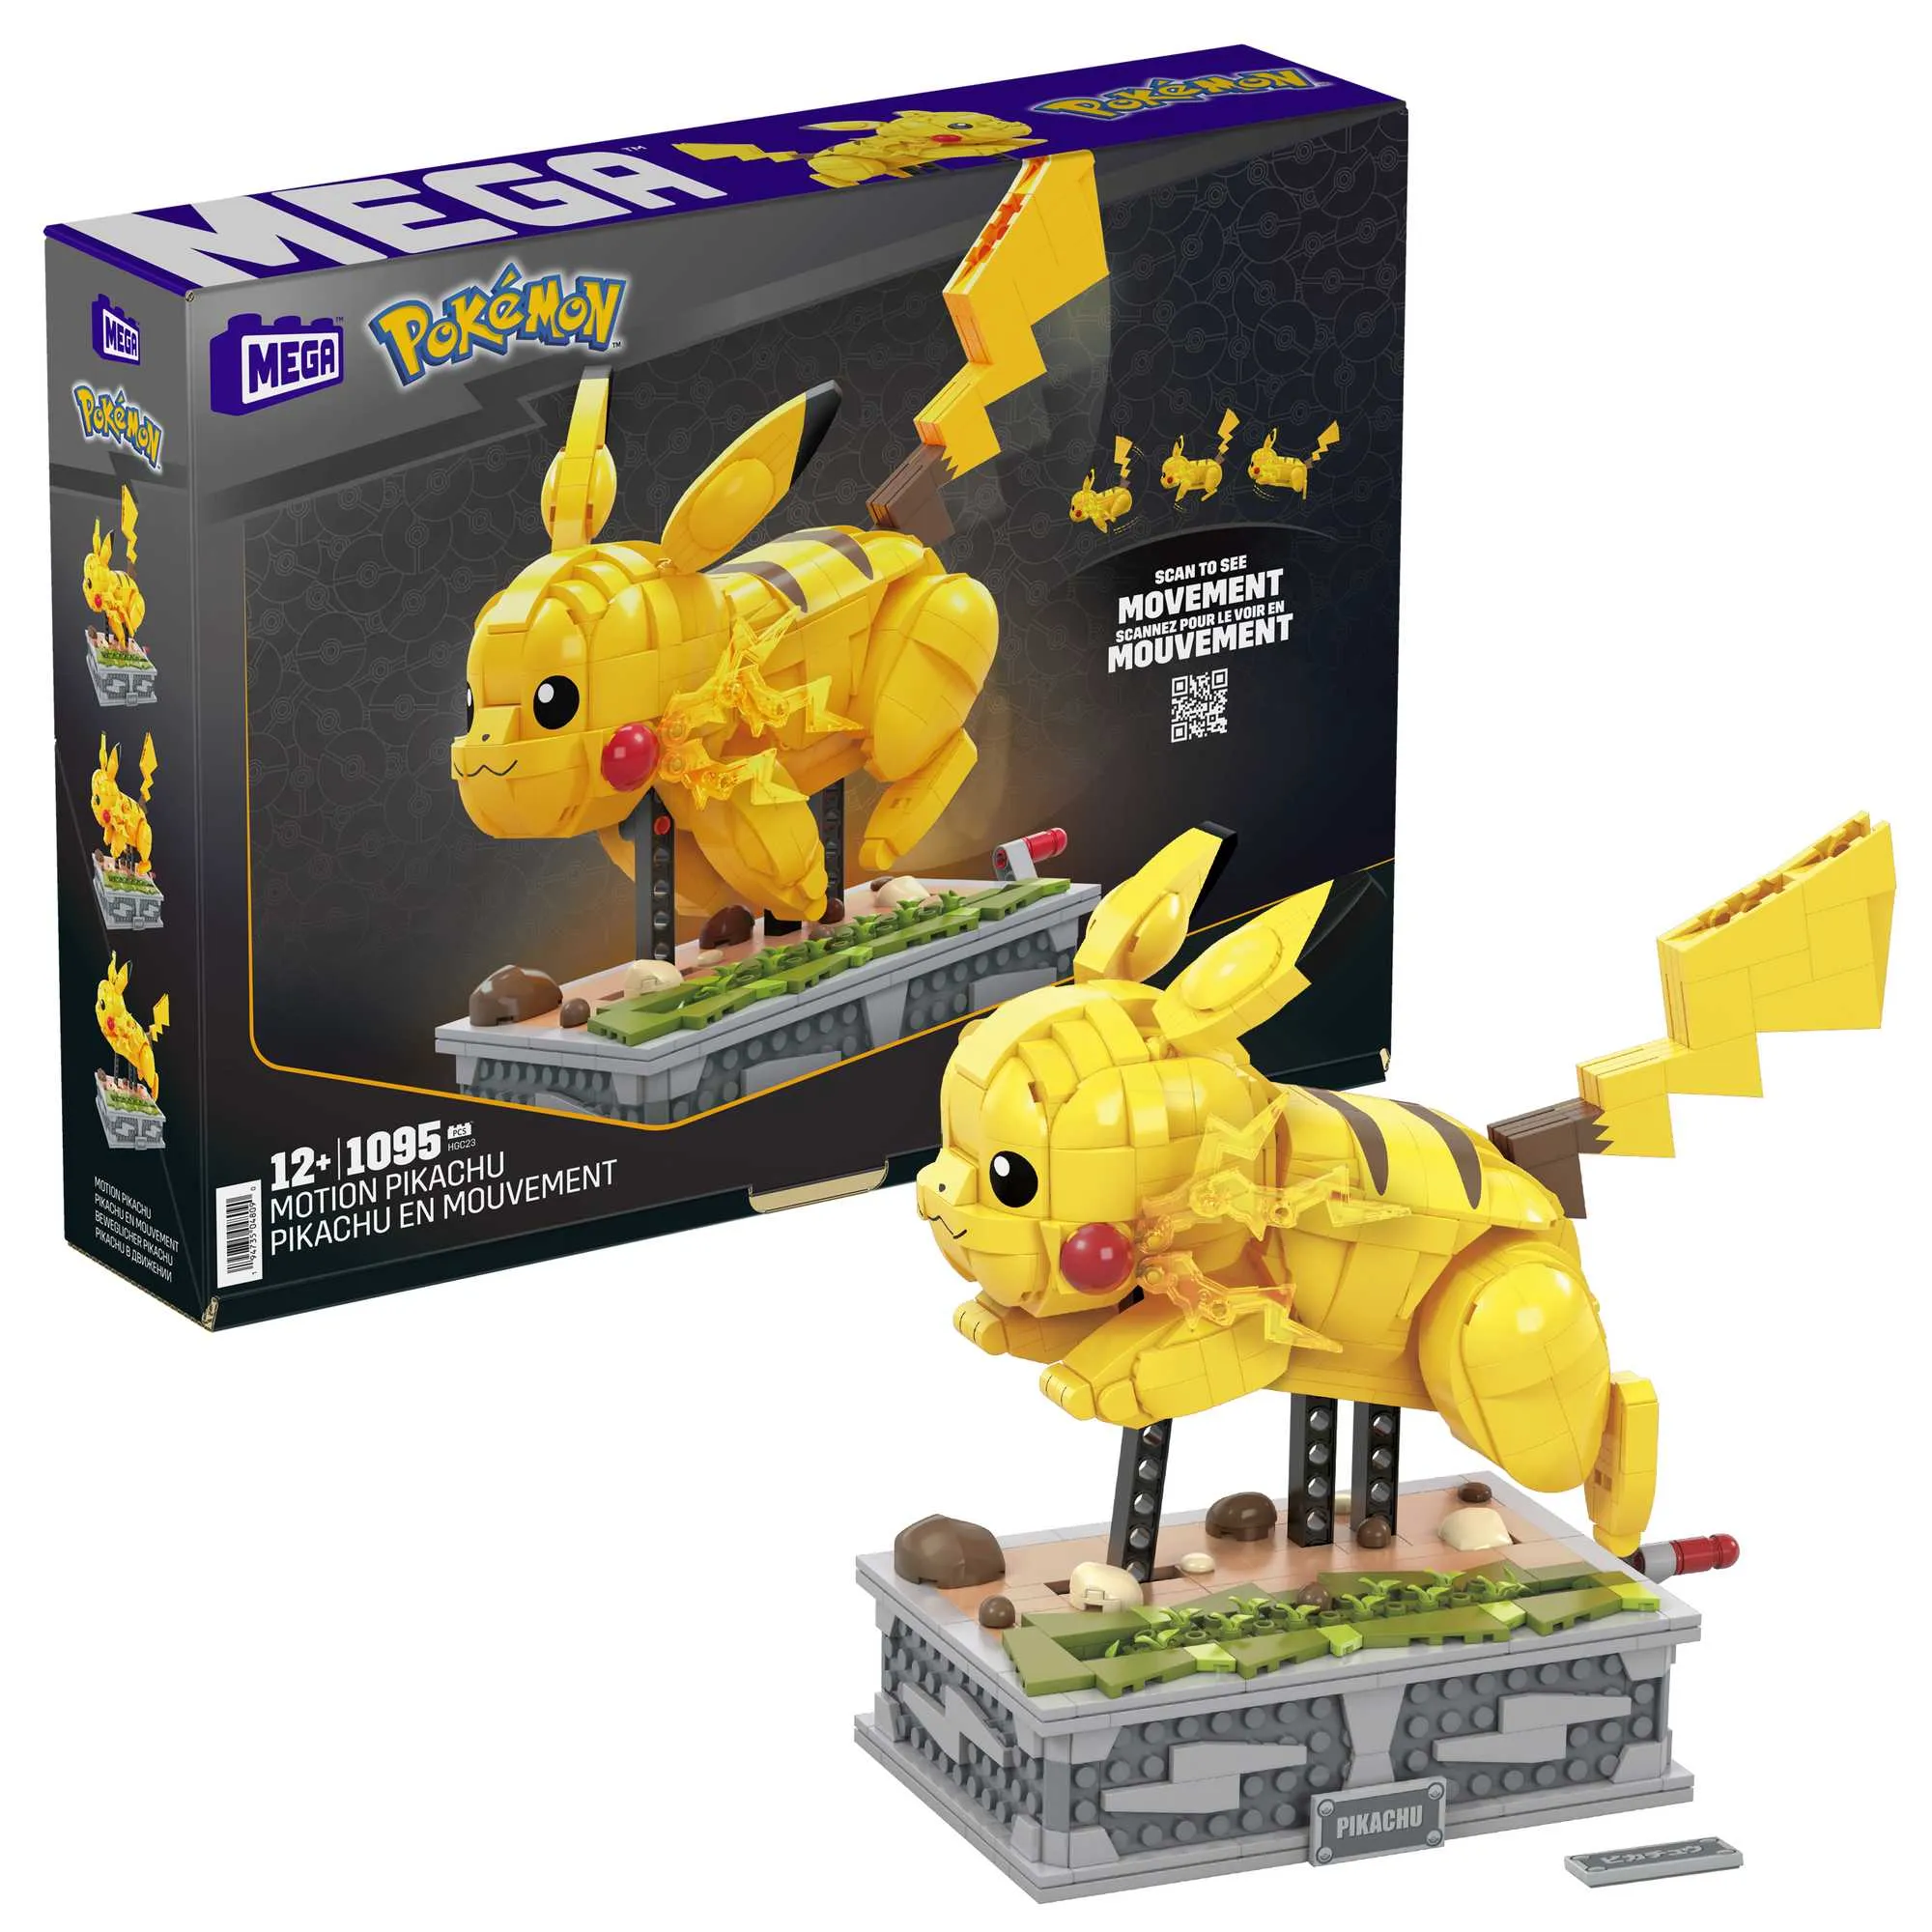 MEGA Construx - Pokémon bewegliches Pikachu | Set HGC23